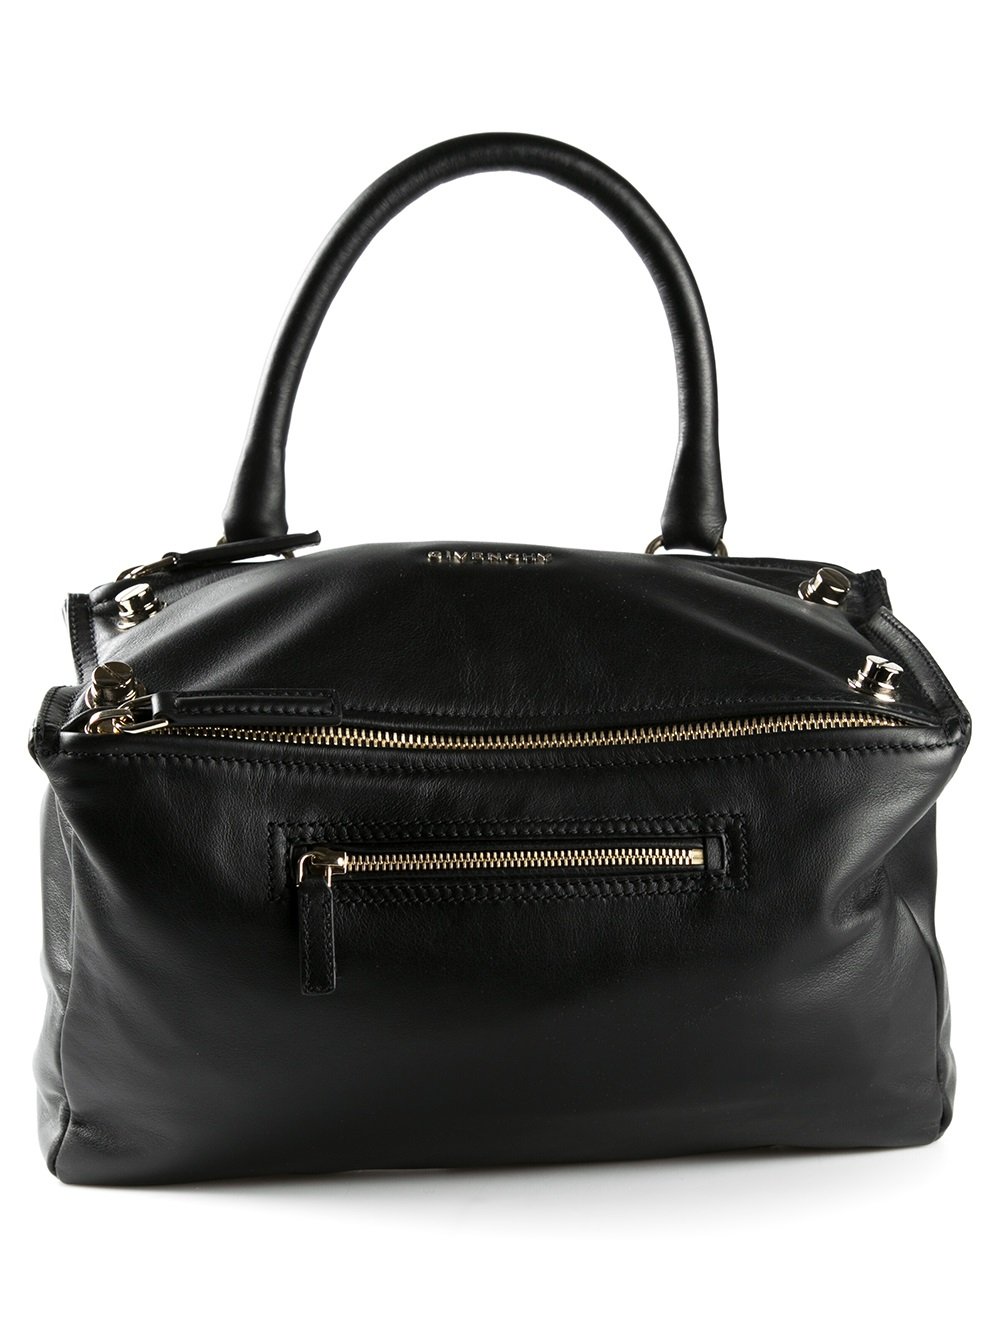 Lyst - Givenchy Medium Pandora Bag in Black